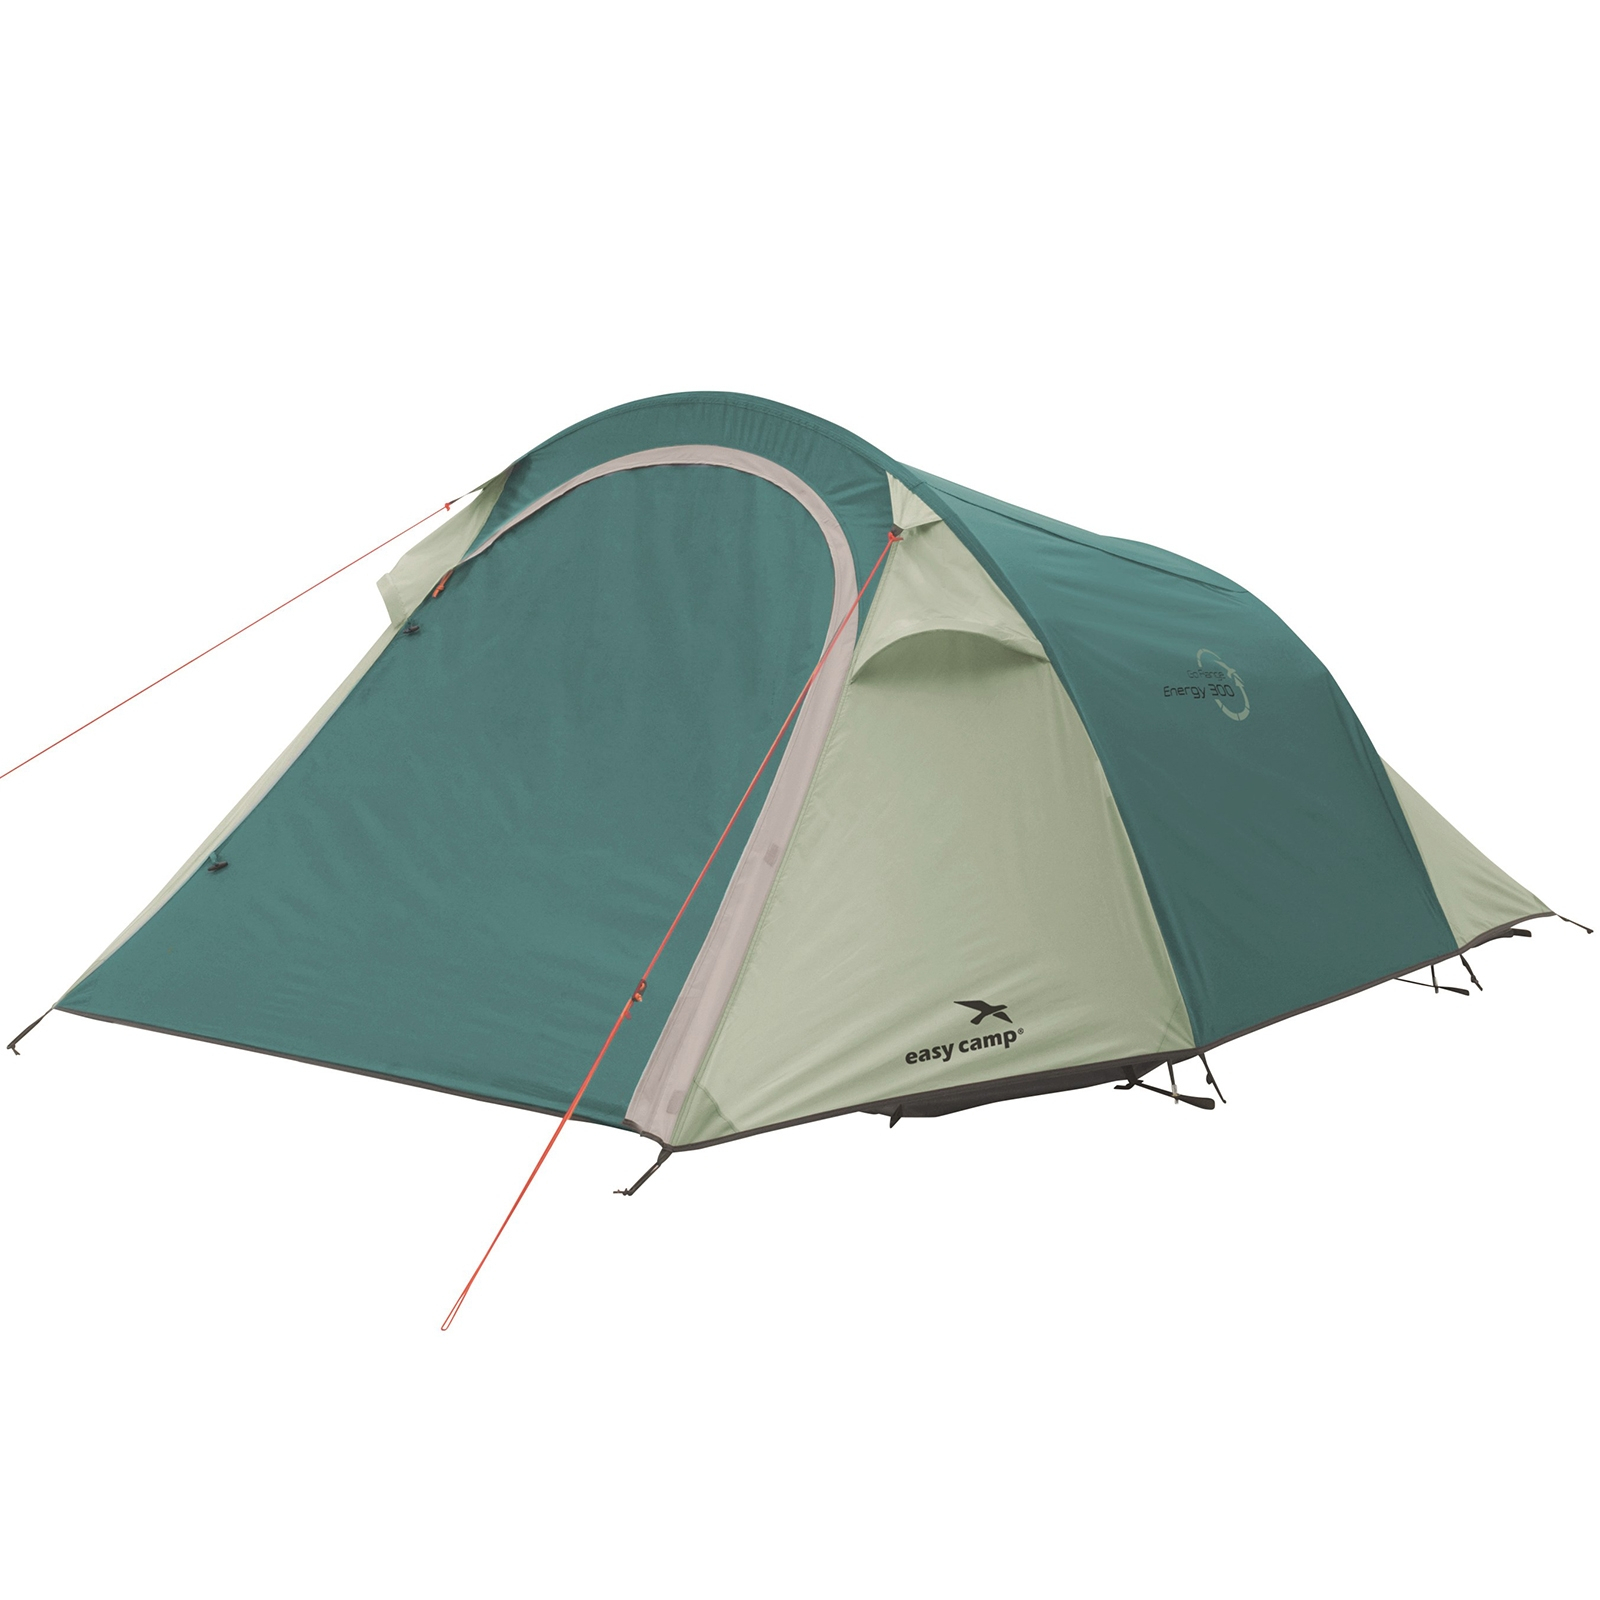 Палатка Easy Camp Energy 300 Teal Green (928300) изображение 2